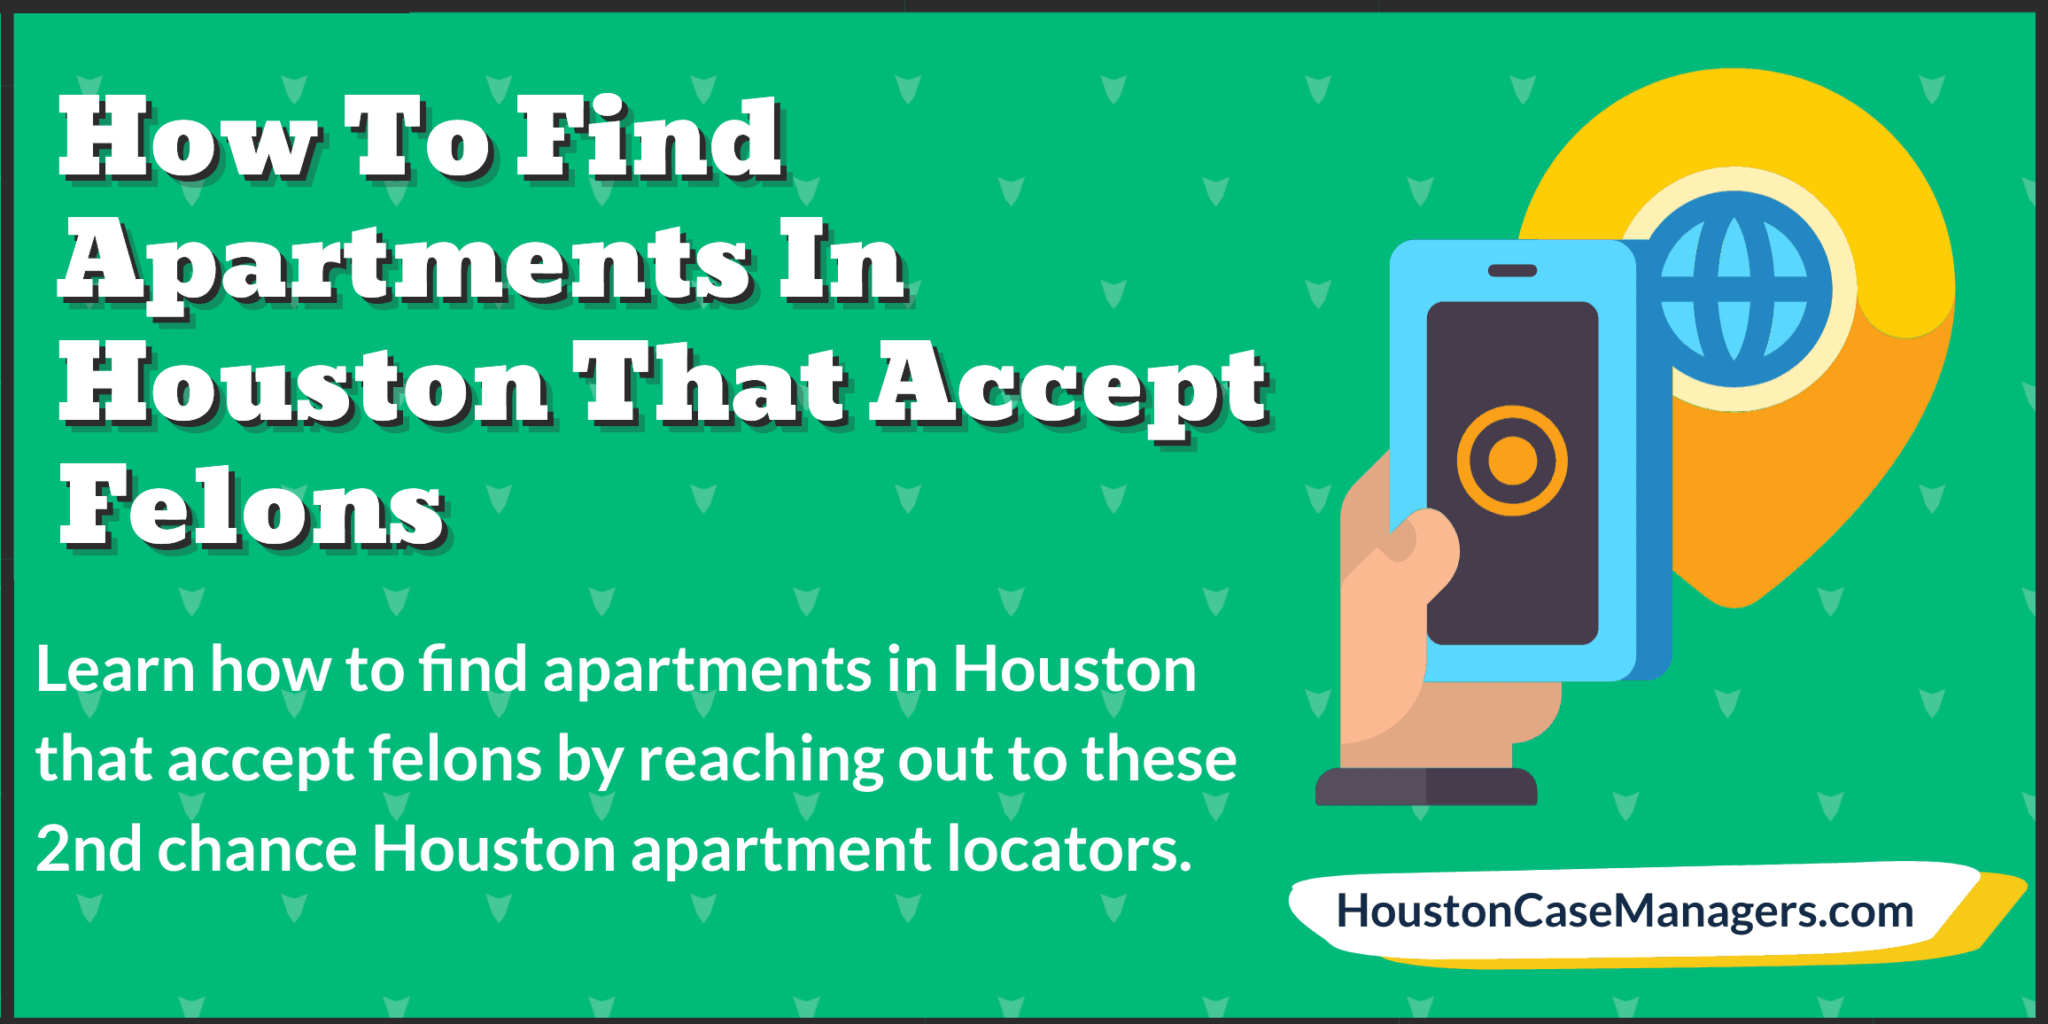 Apartments that accept felons